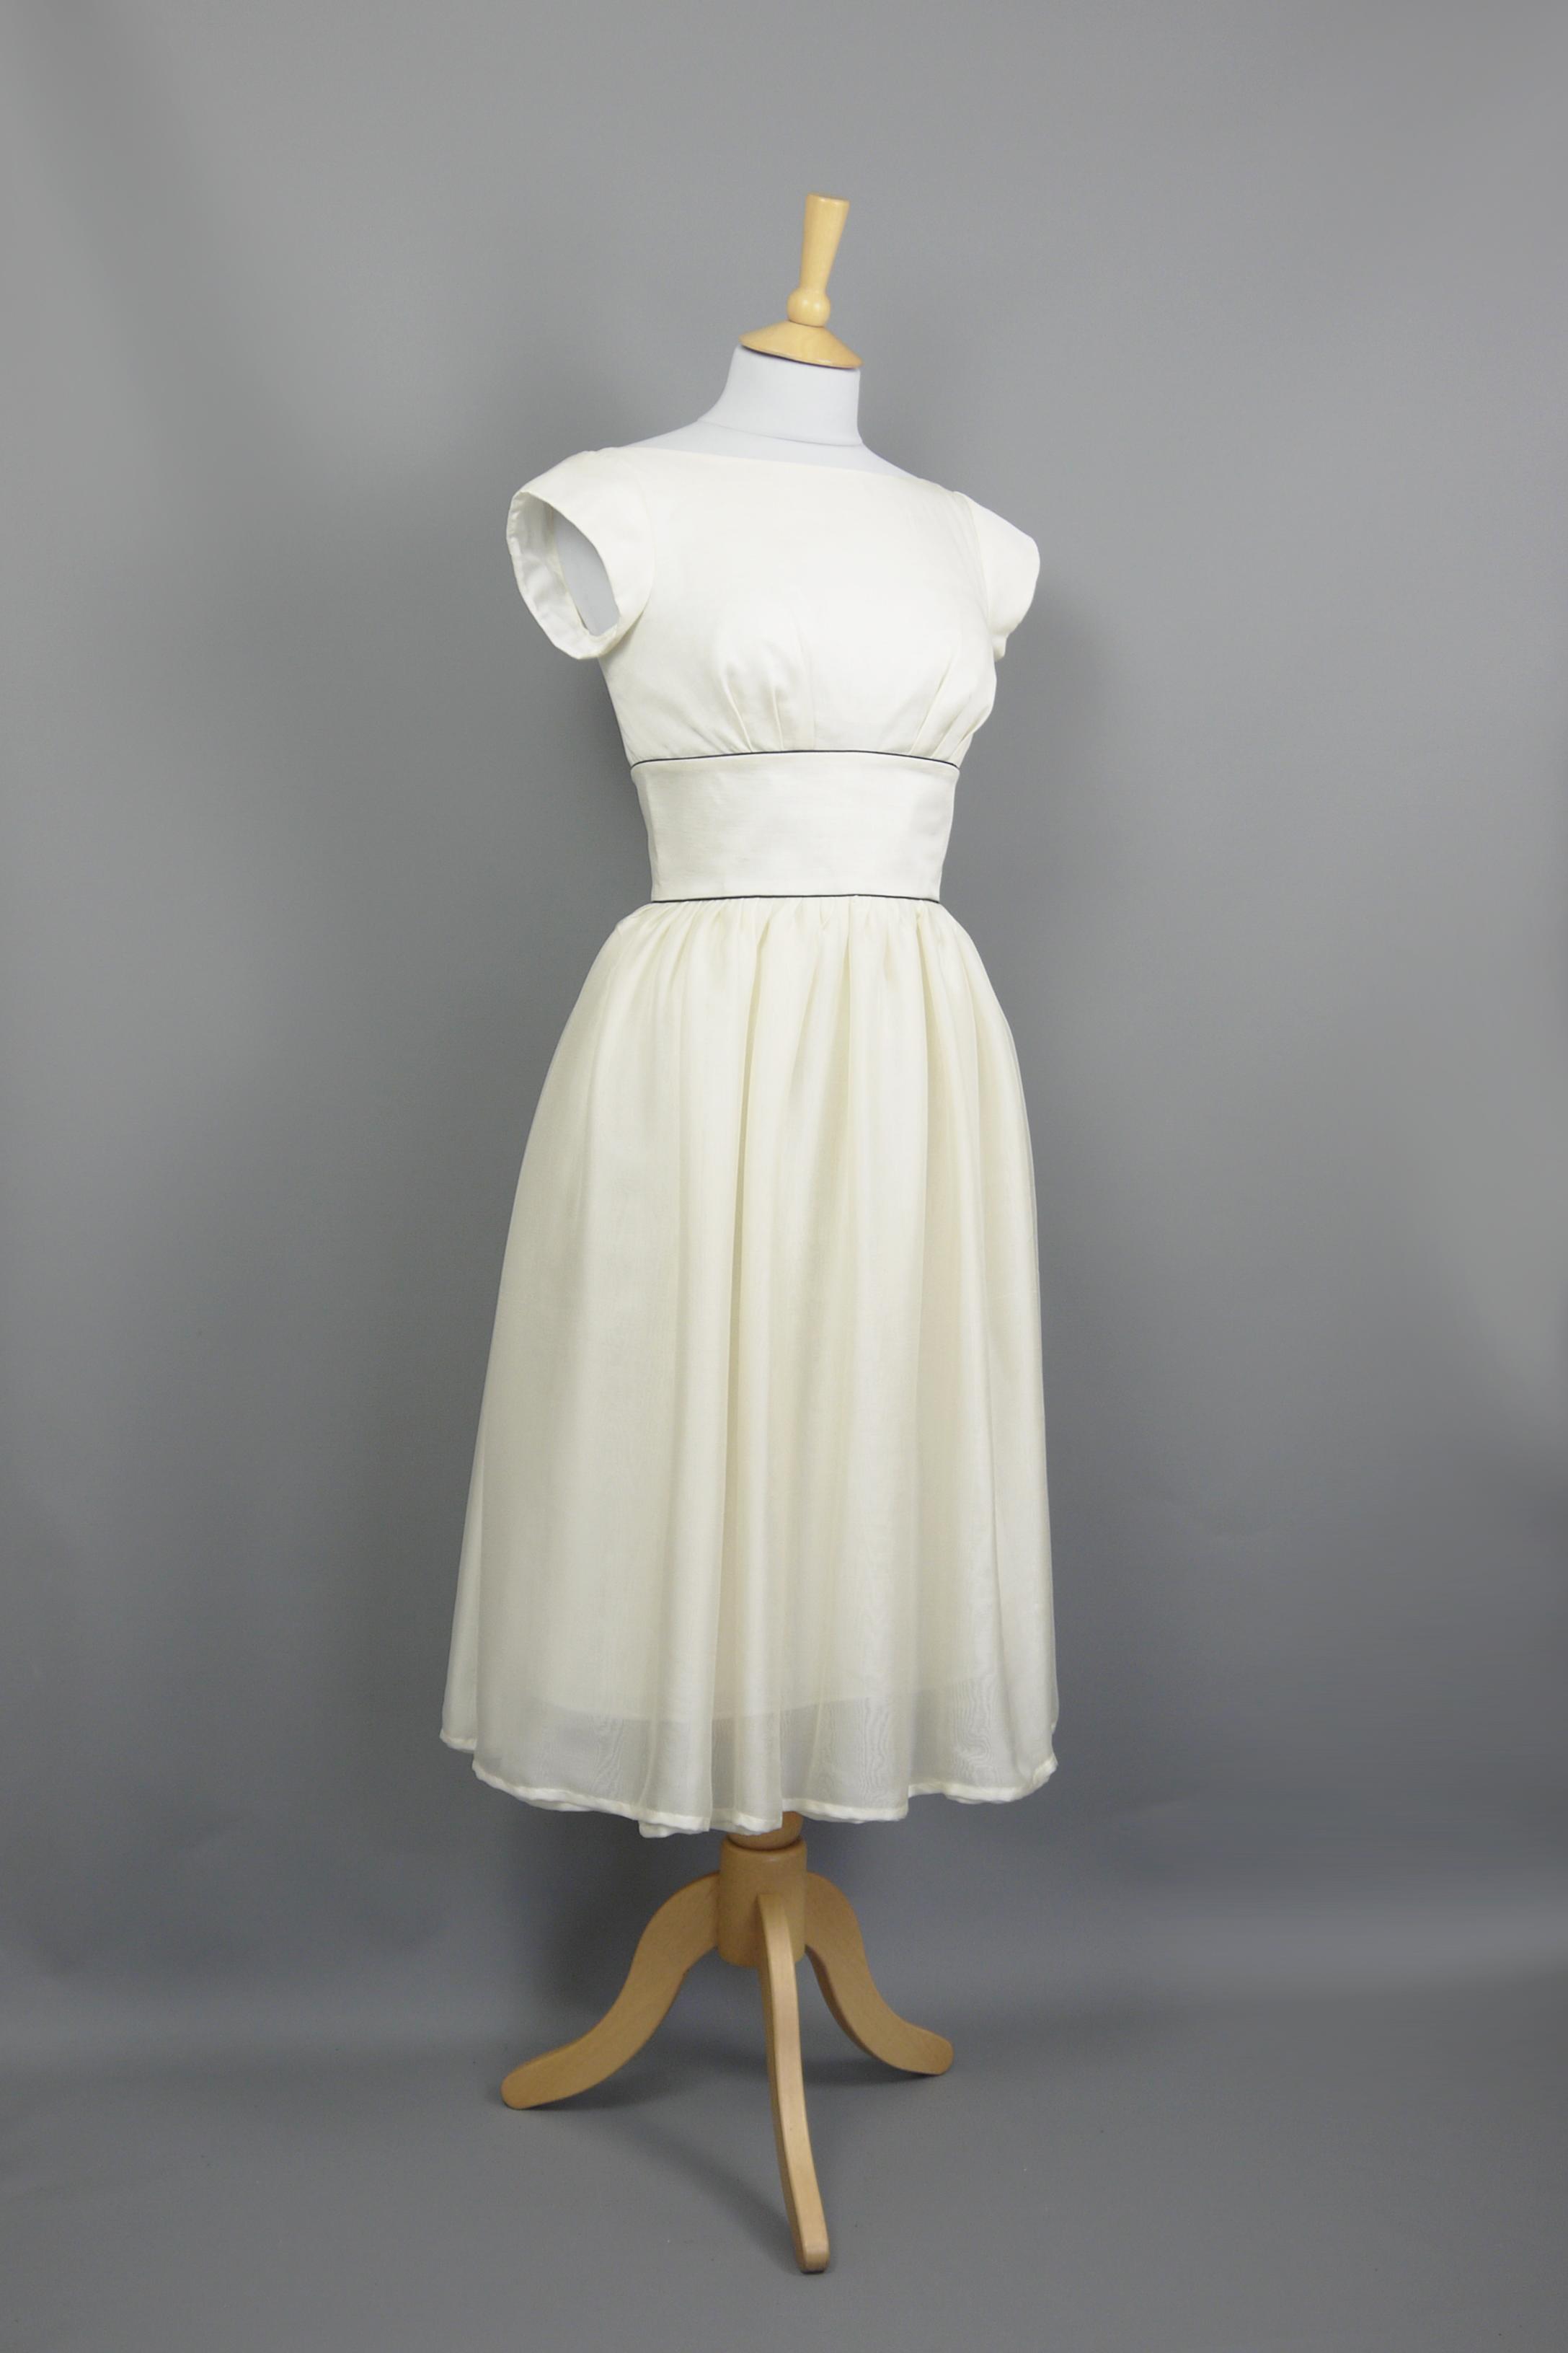 Paris Short 1940s Wedding Dress in Ivory Silk Chiffon